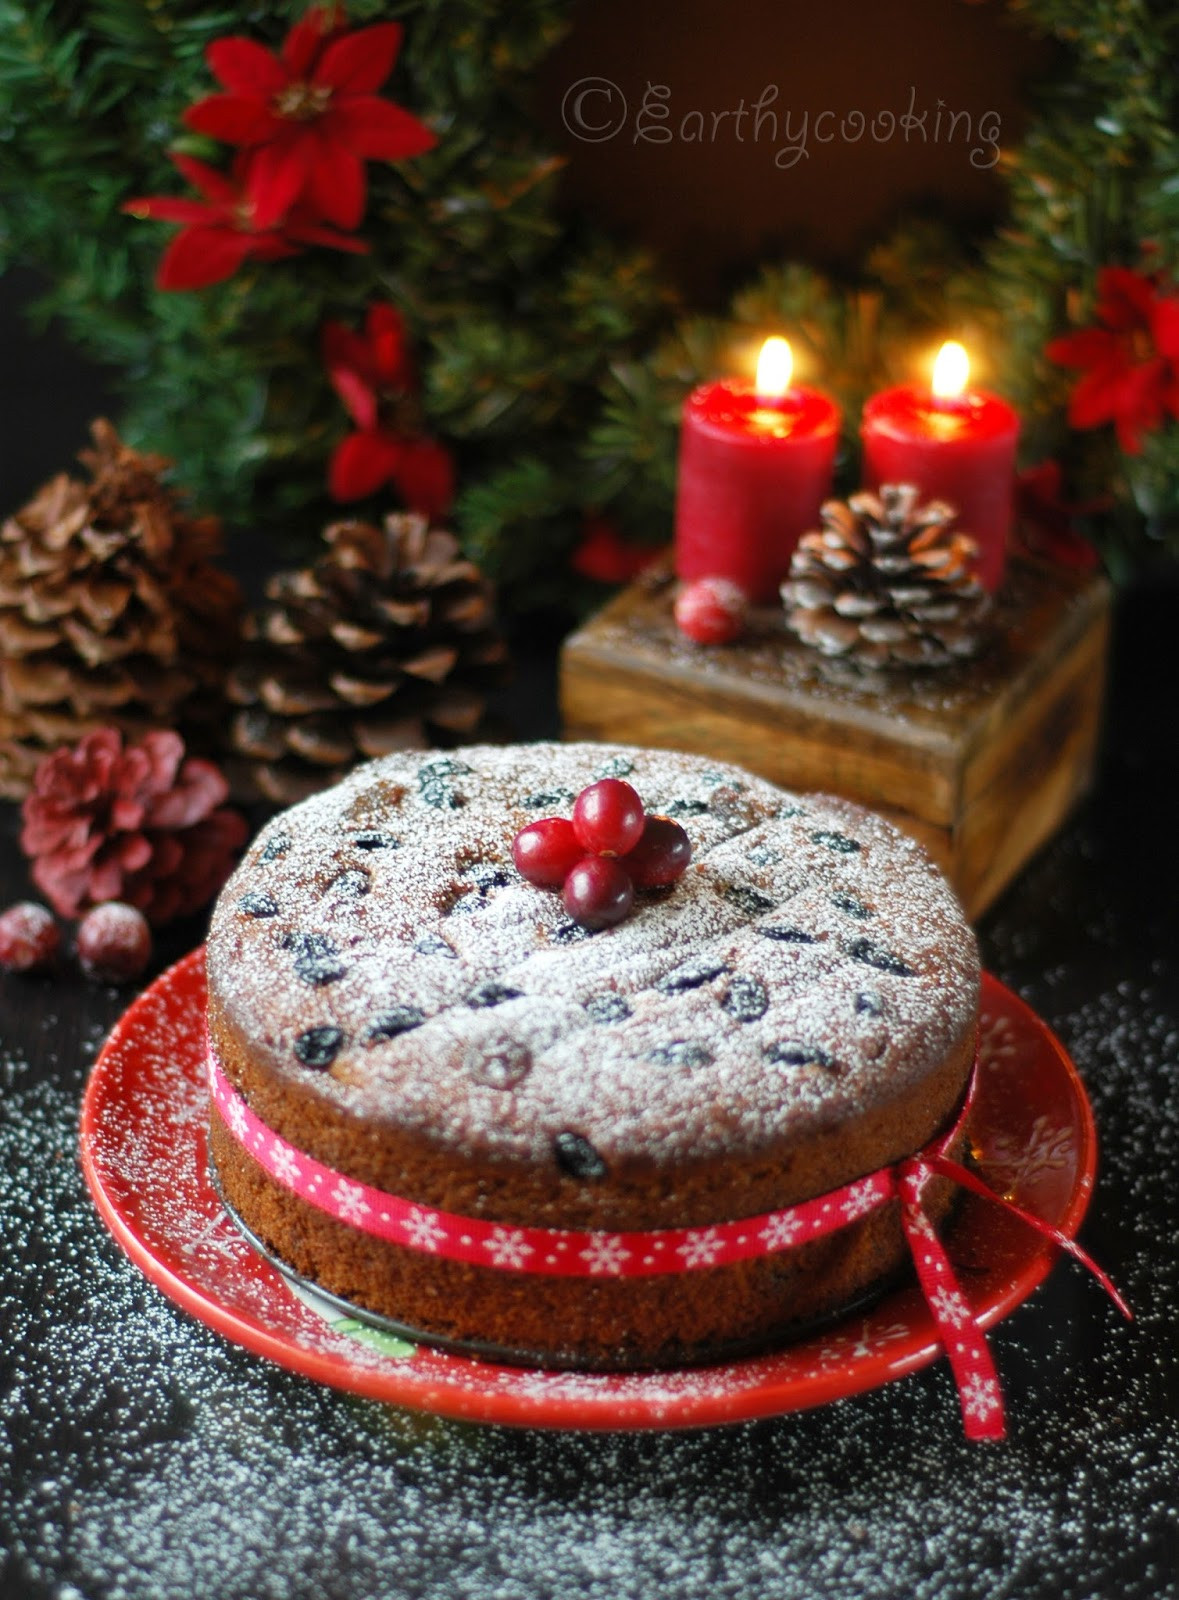 Christmas Fruit Cake Recipe With Rum
 Earthycooking Rum Soaked Christmas Fruit Cake